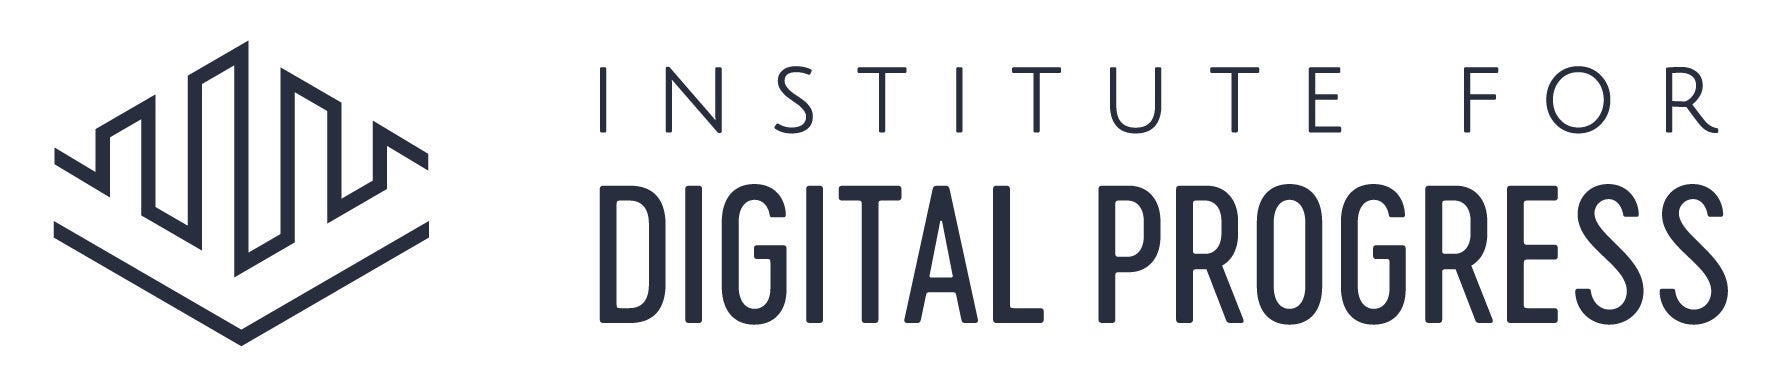 Institute for Digital Progress